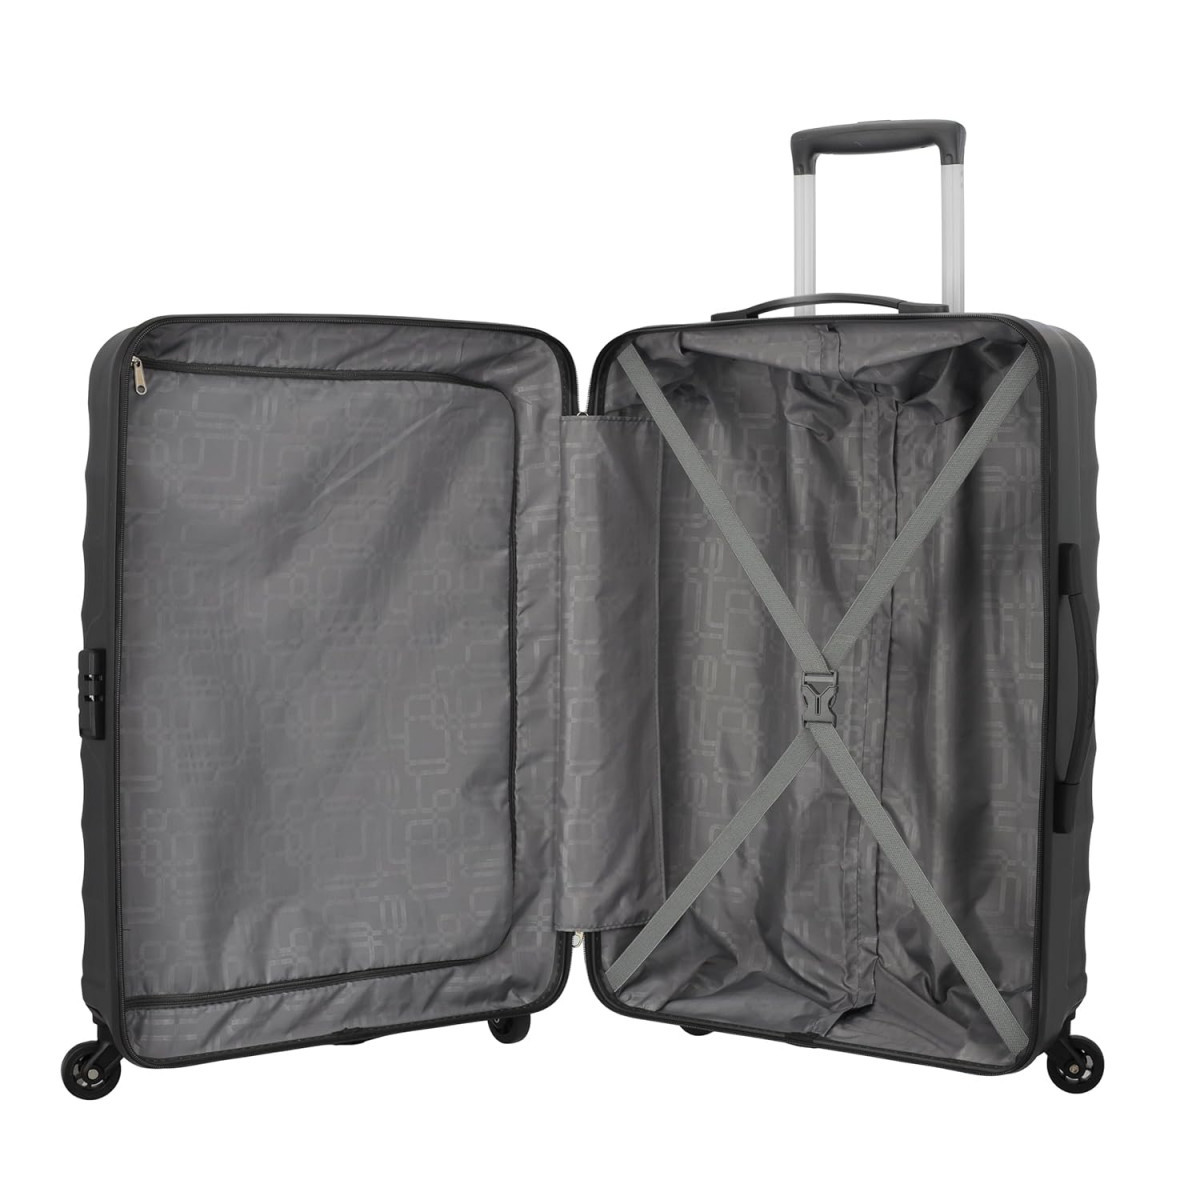 American Tourister Trolley Bag for Travel  Barcelona 69 Cms Polycarbonate Hardsided Medium Check-in Luggage Bag  Suitcase for Travel  Trolley Bag for Travelling Gunmetal